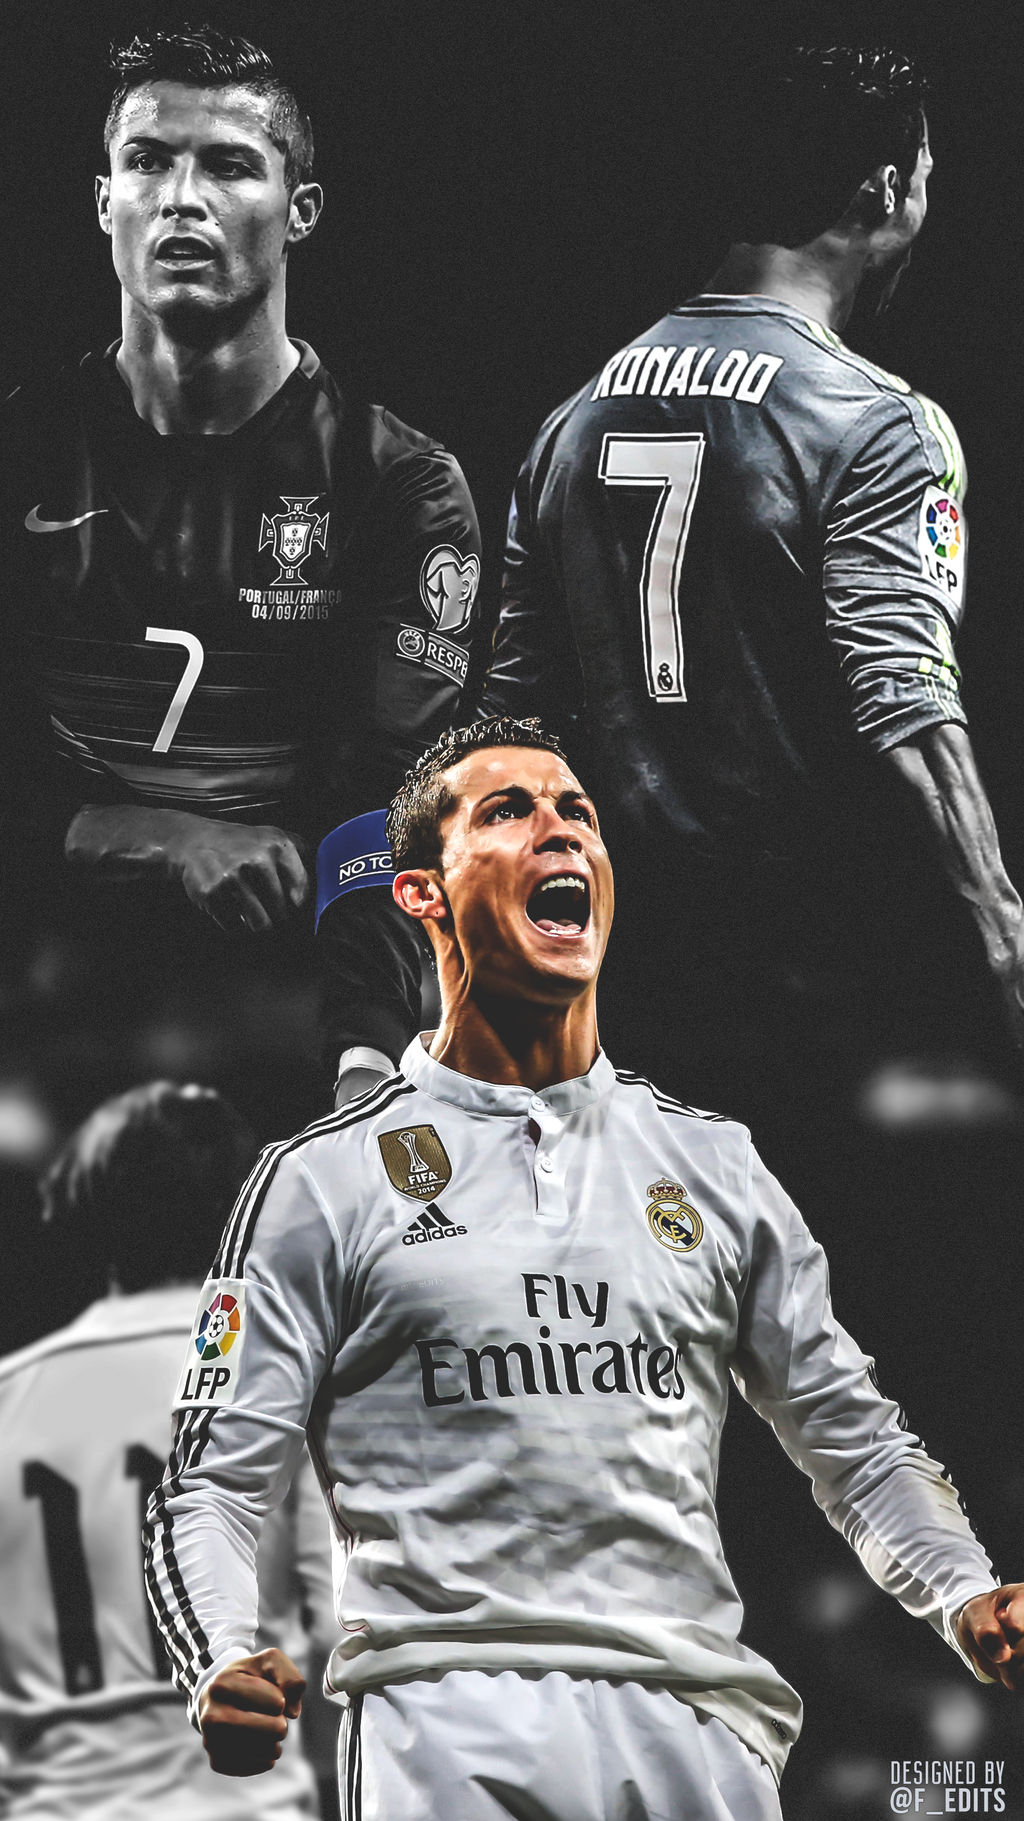 Cristiano Ronaldo Wallpaper 2015 by F-EDITS on DeviantArt